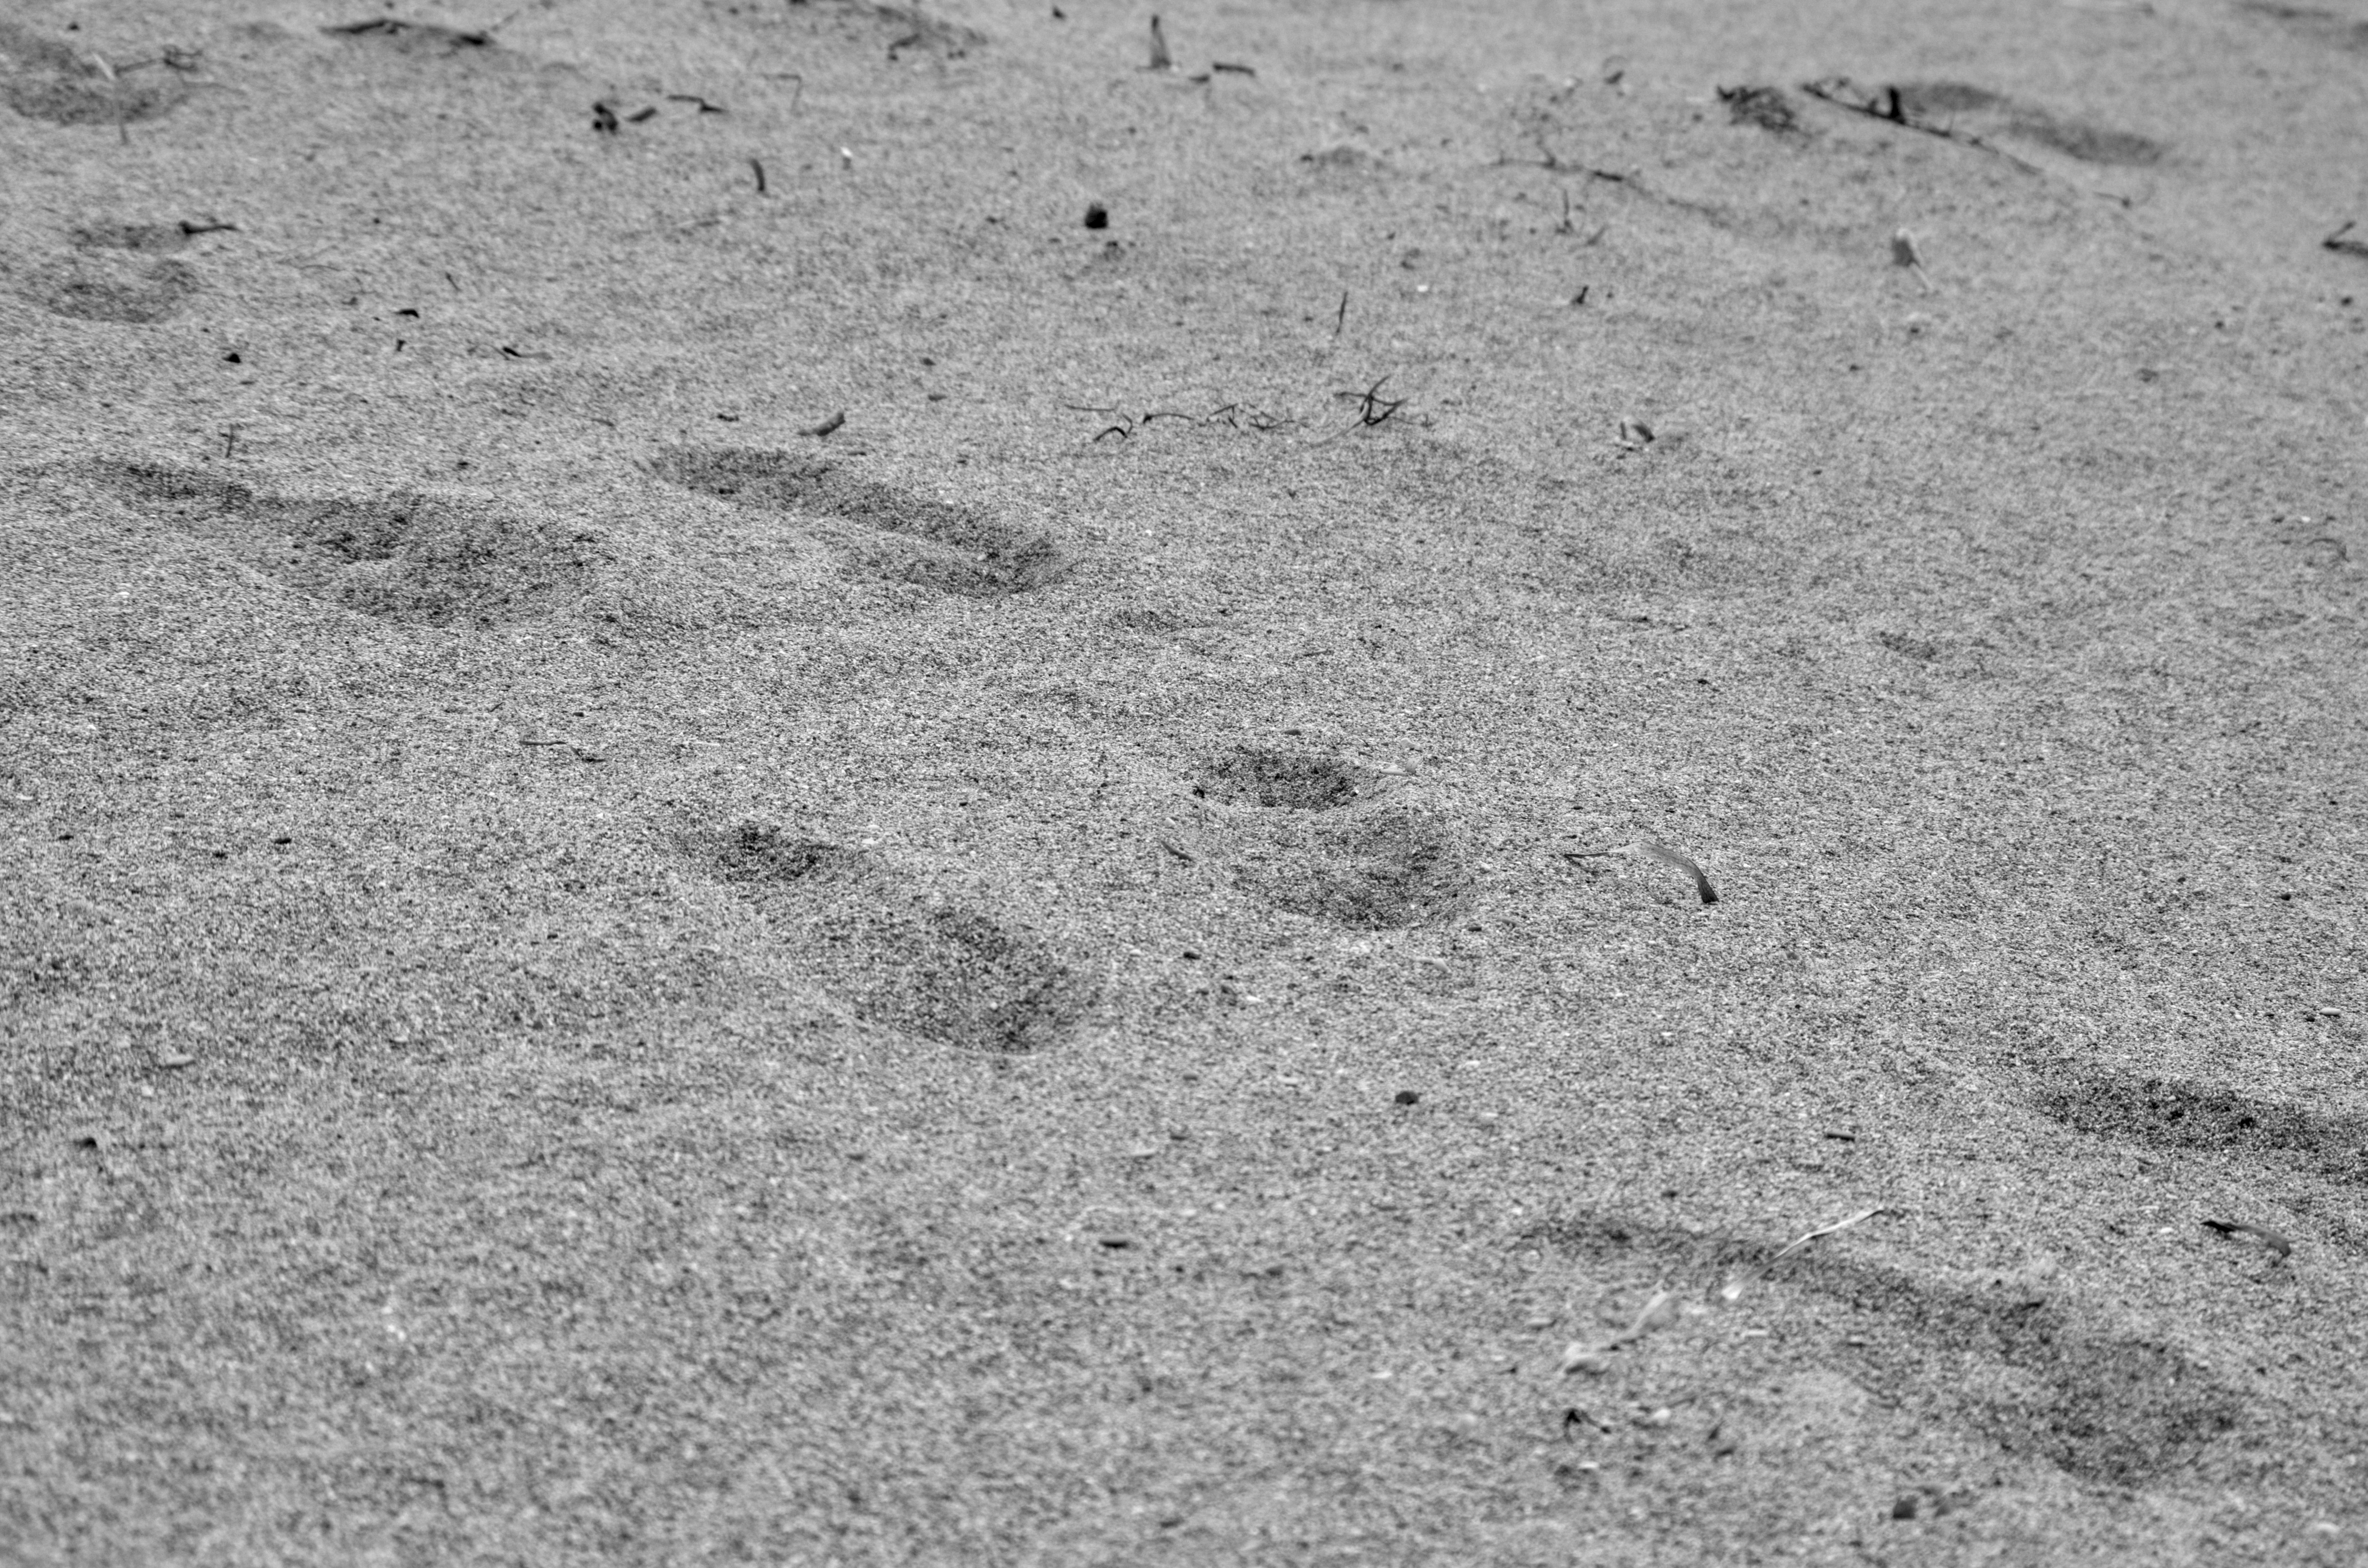 Monochrome Photography Sand Beach Summer Foot Prints Outdoors 4928x3264